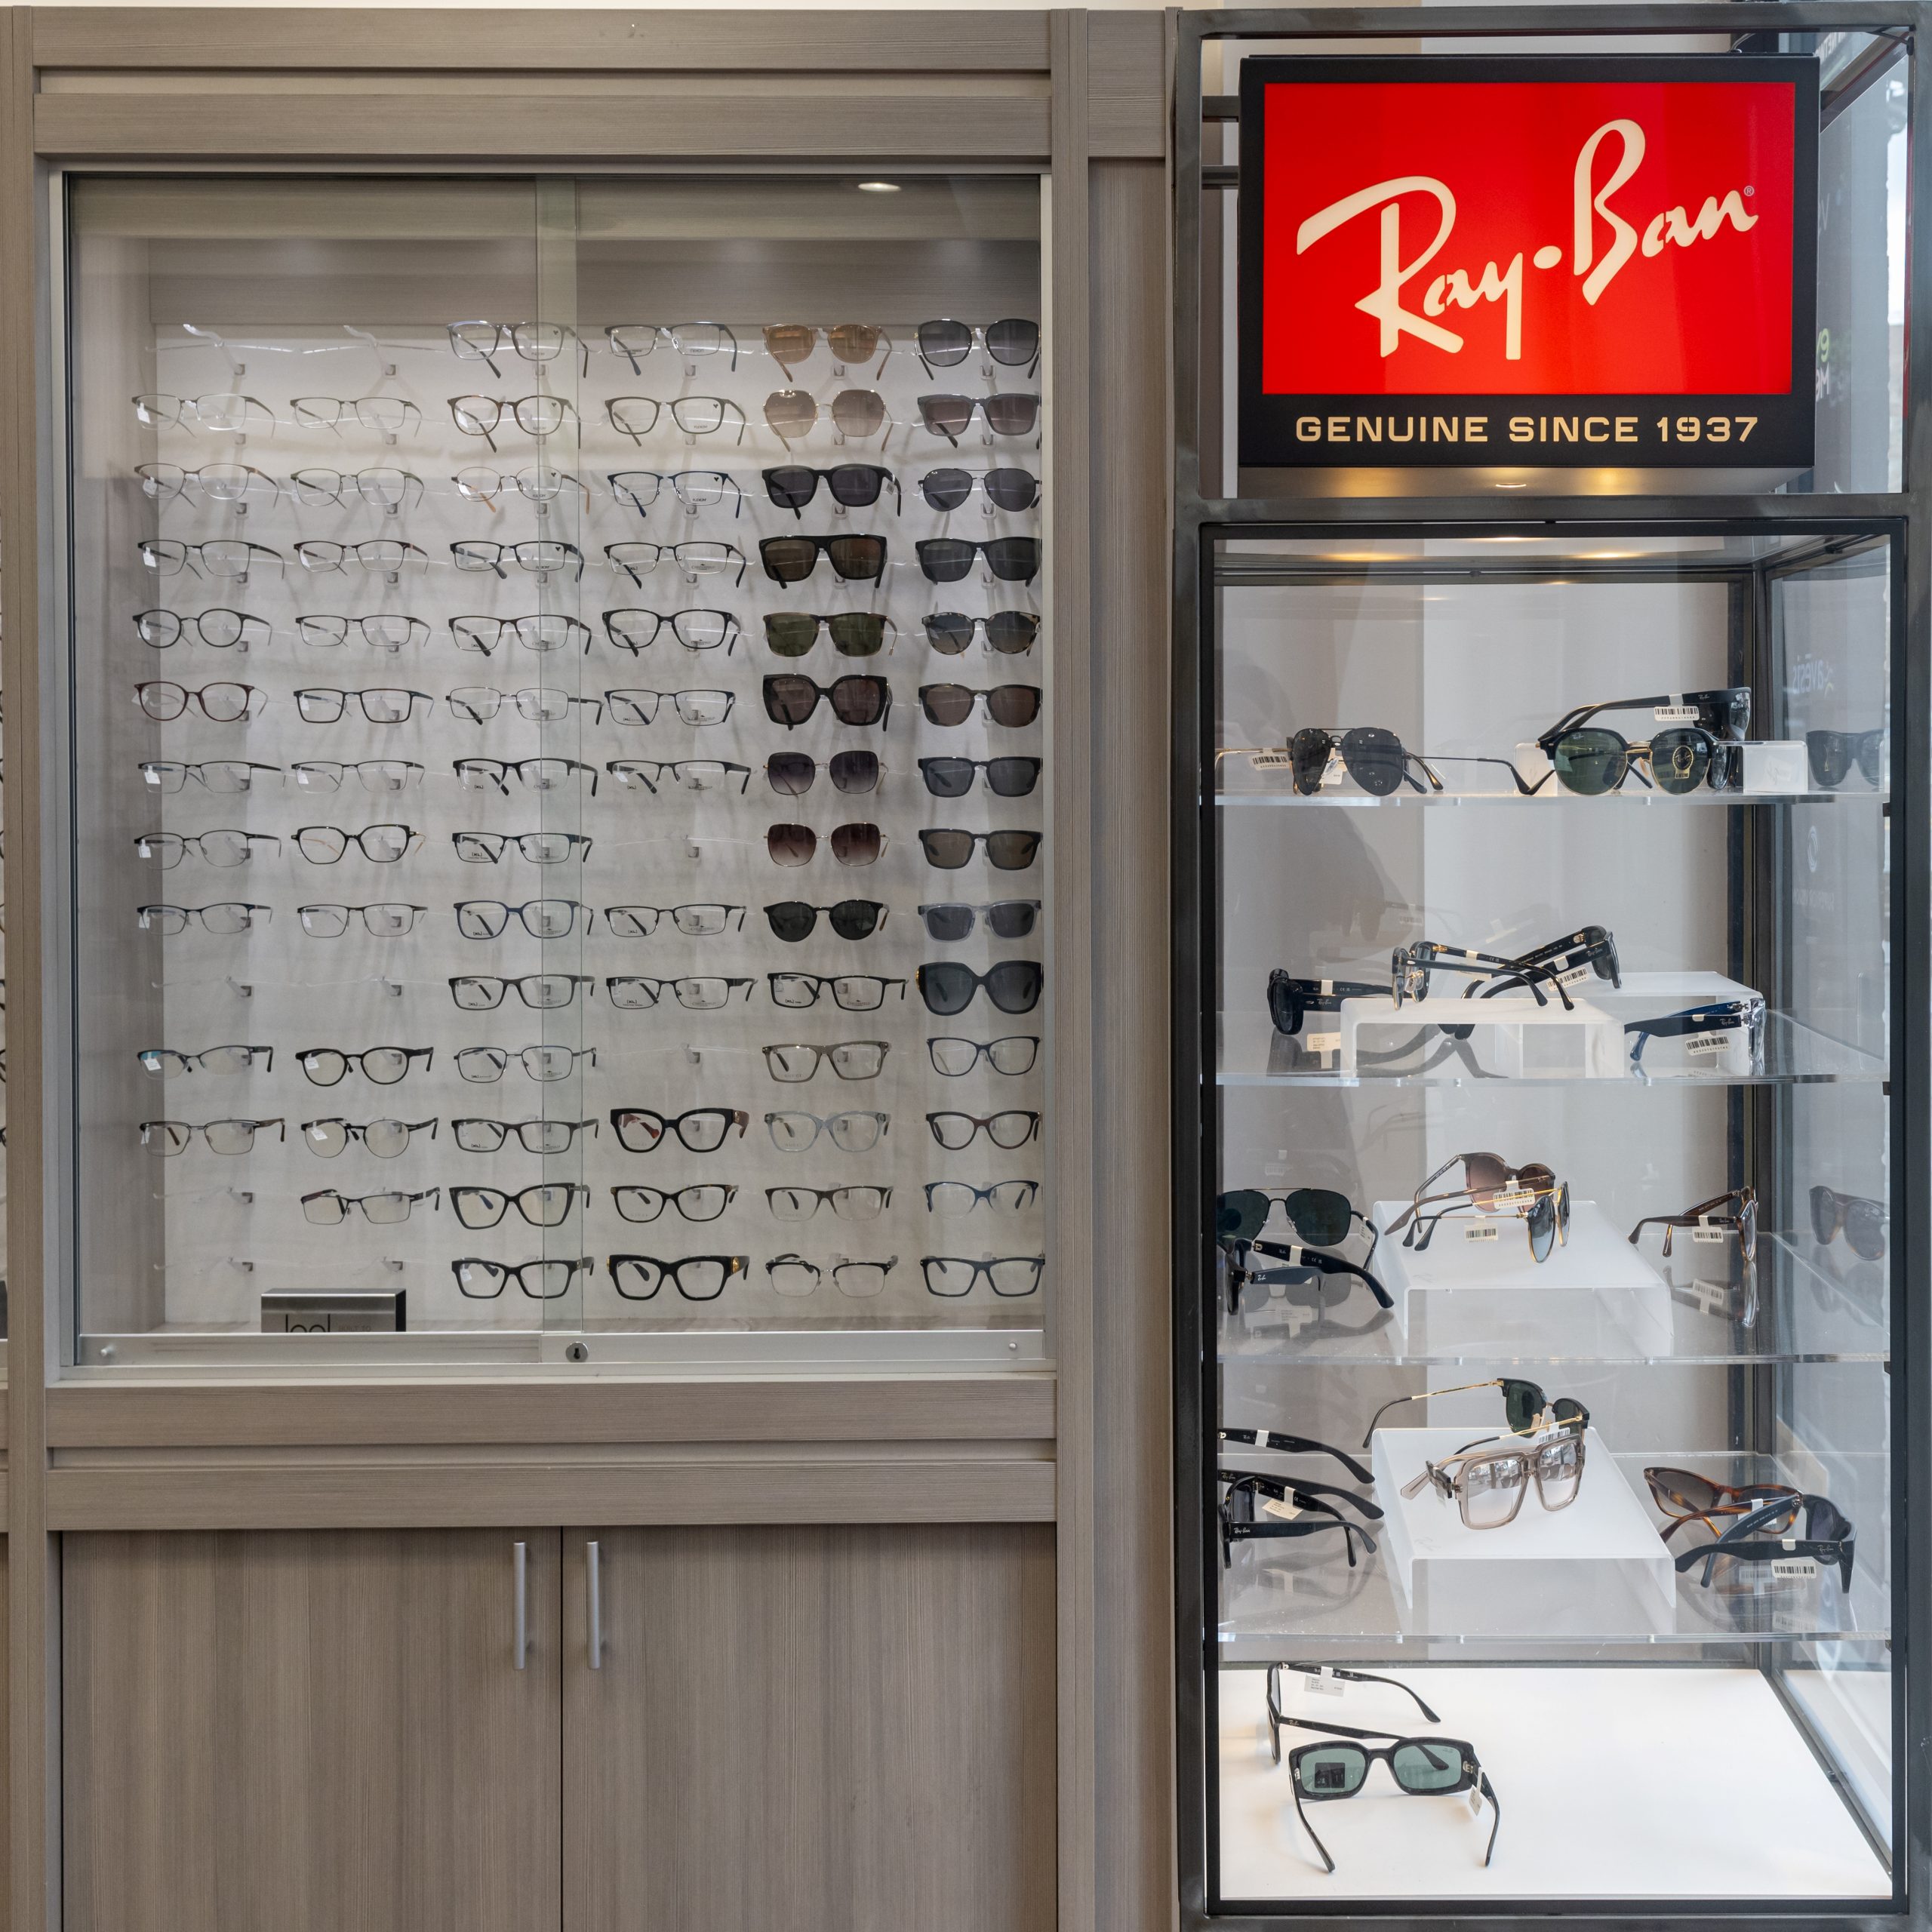 Ray Ban sunglasses display